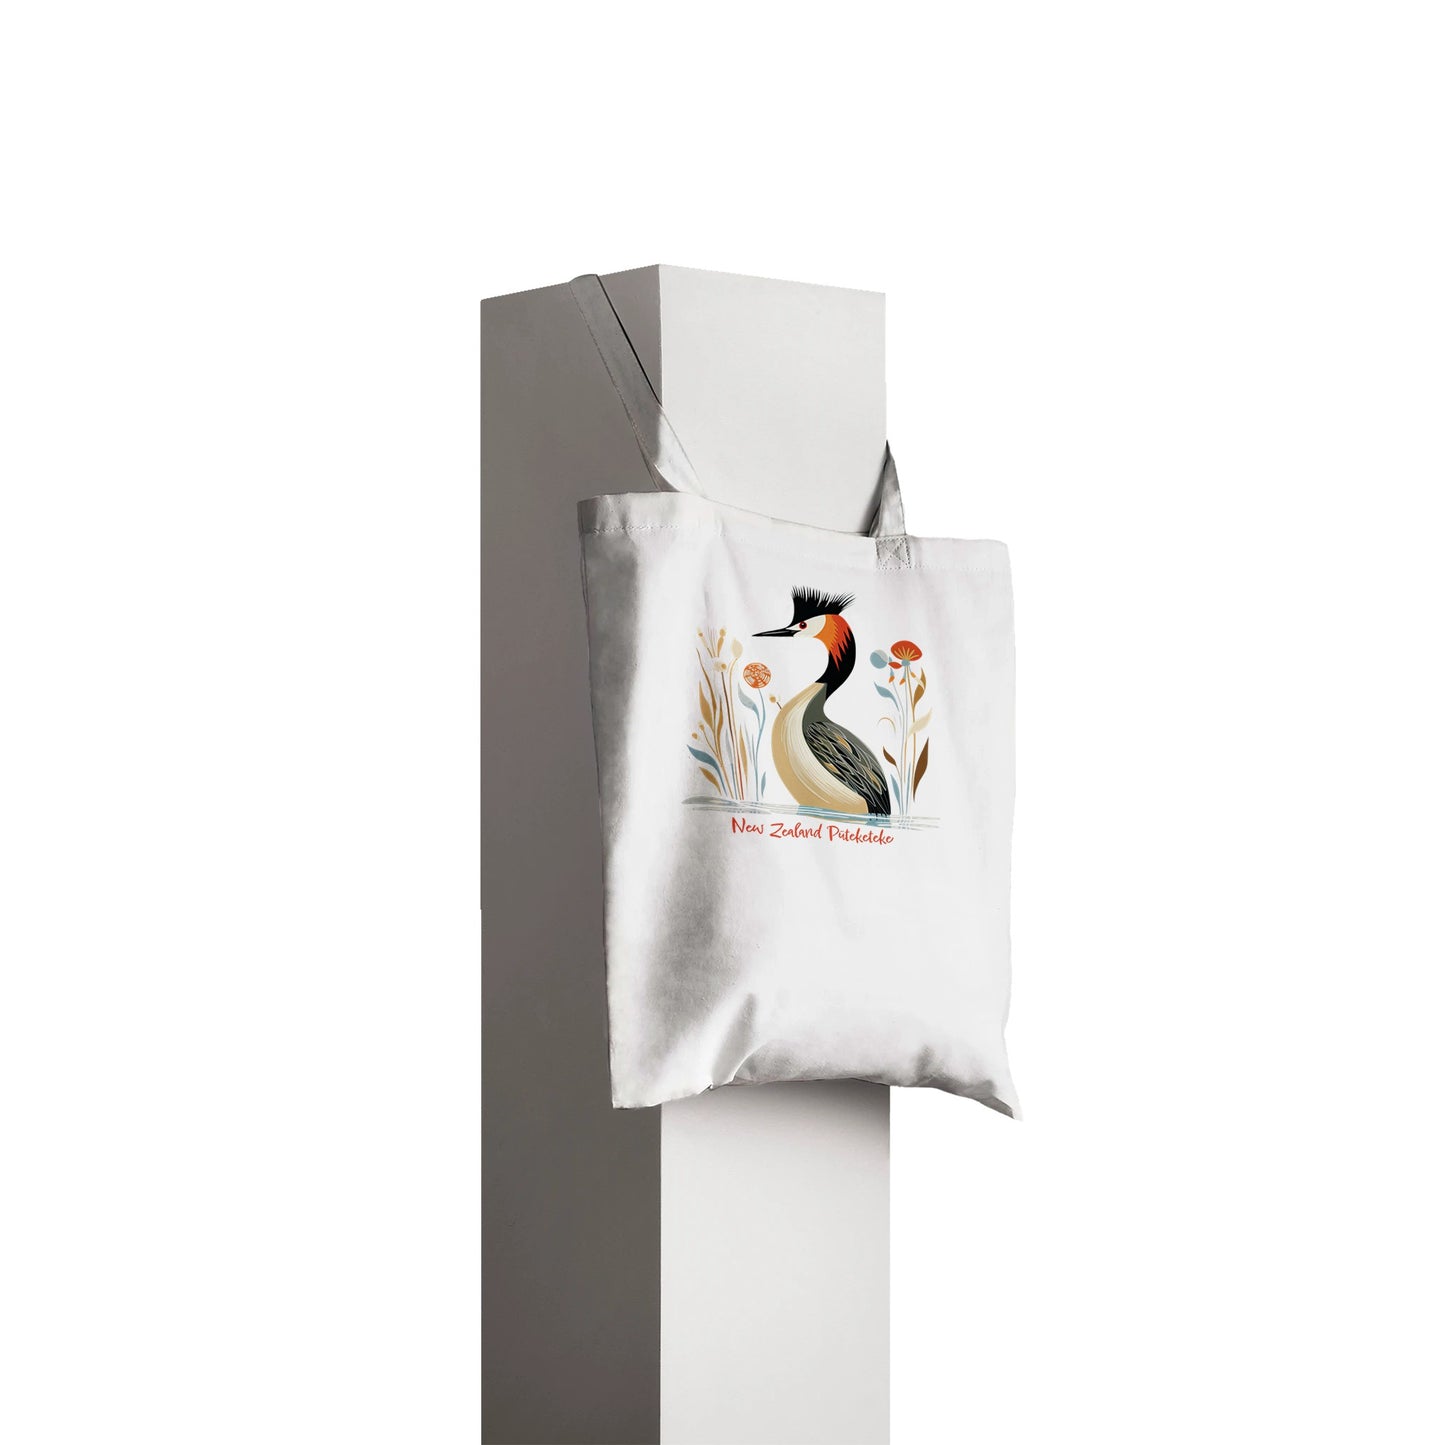 Tote bag with New Zealand Puteketeke bird print